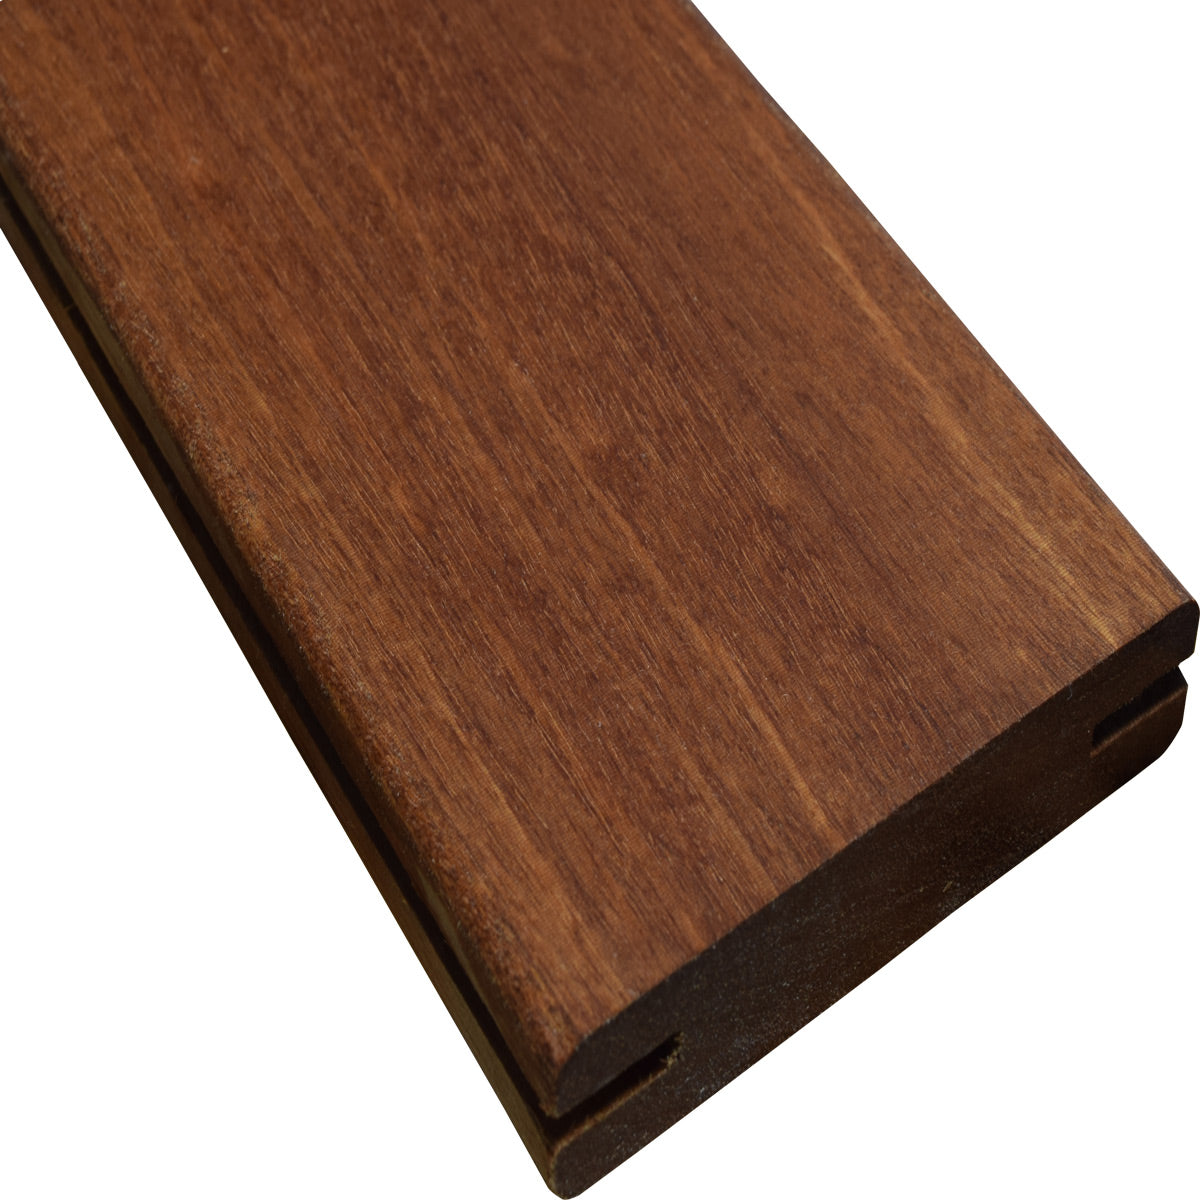 5/4 x 4 Mahogany (Red Balau) Wood Pregrooved Decking